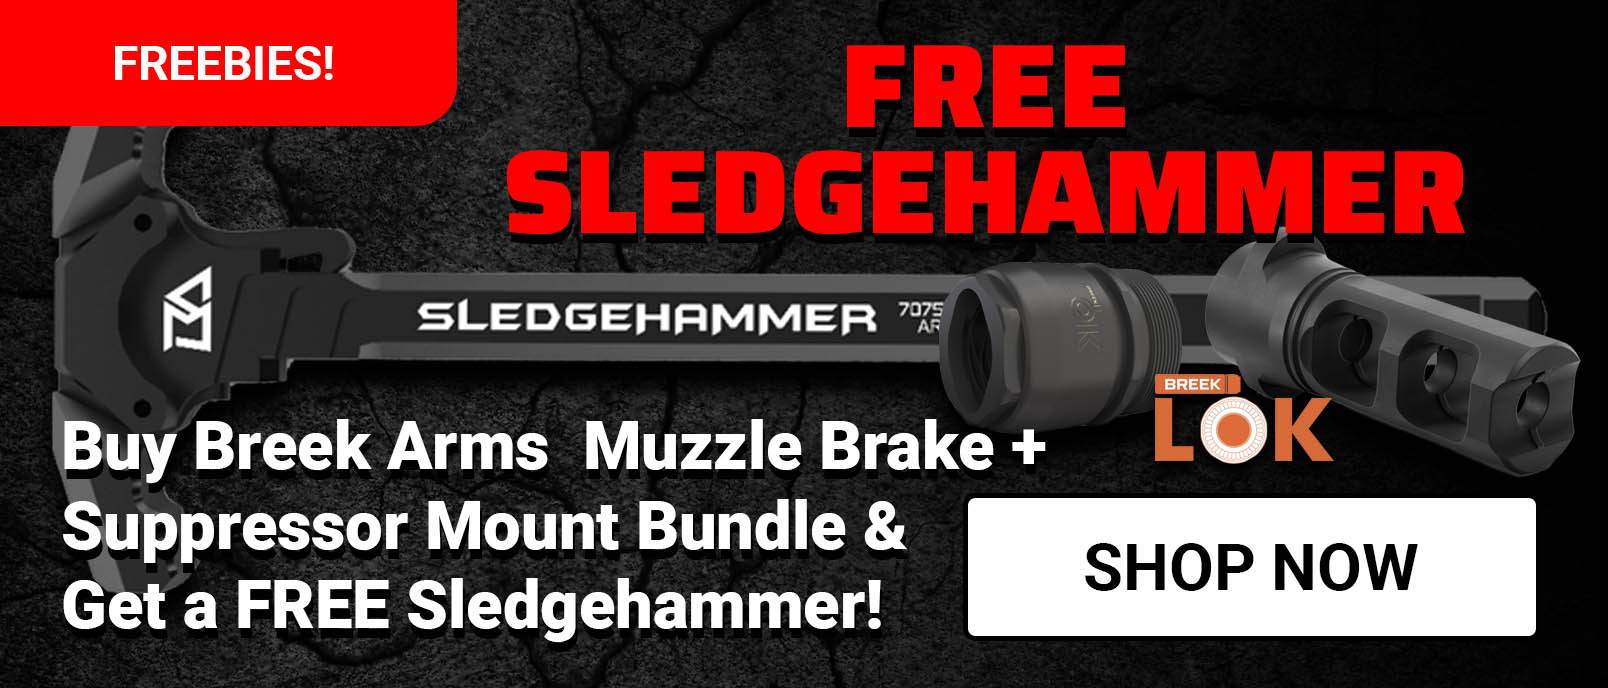 Breek Arms Twin Port Muzzle Brake + Breek-LOK Suppressor Mount + FREE Sledgehammer Charging Handle